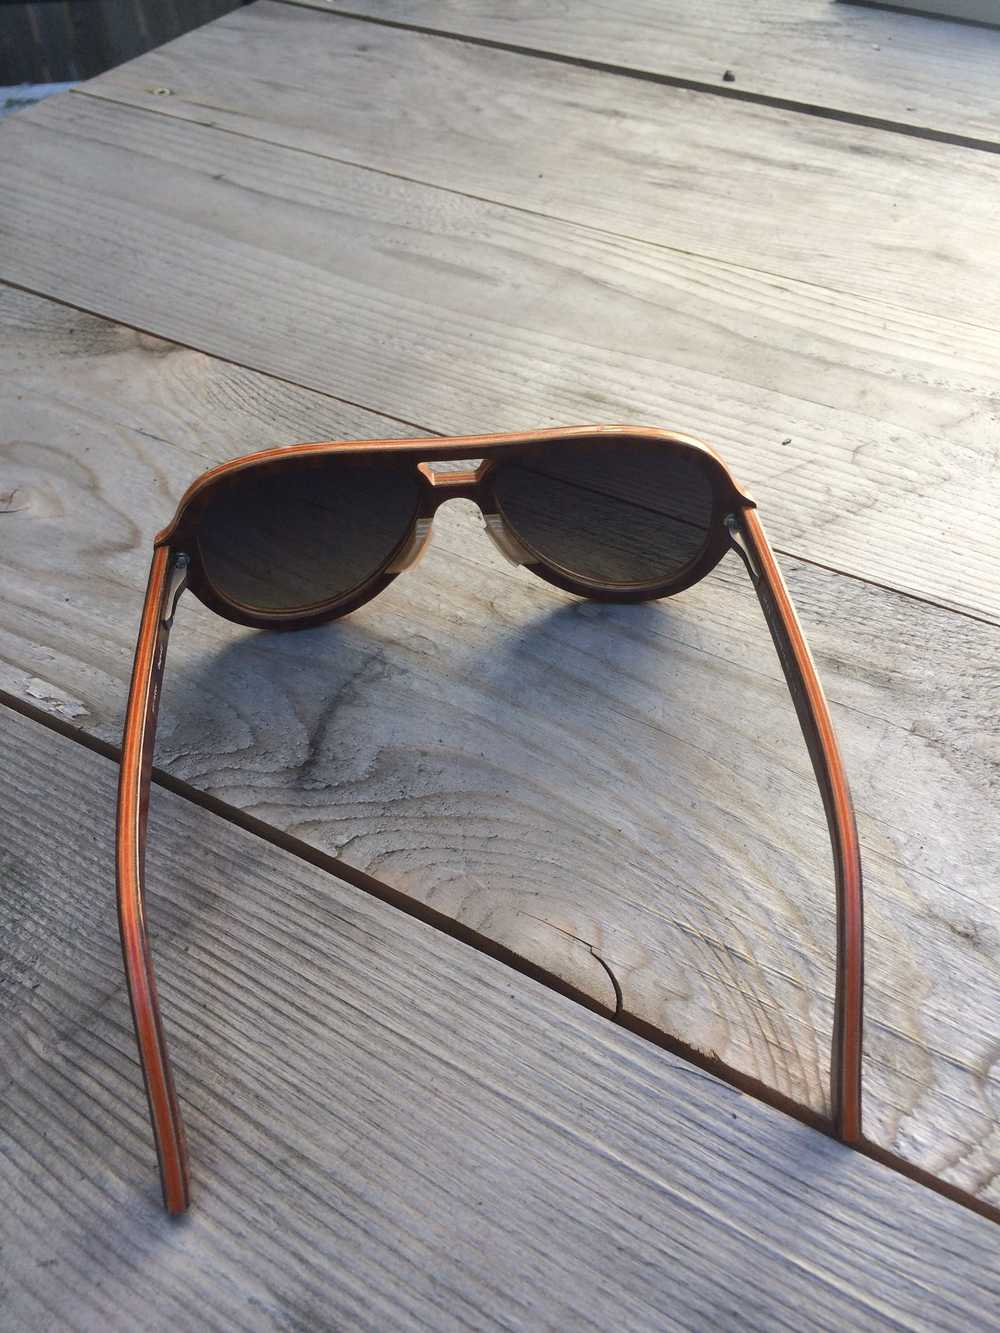 Vintage Handmade in Ohio, USA Wooden Sunglasses - image 5